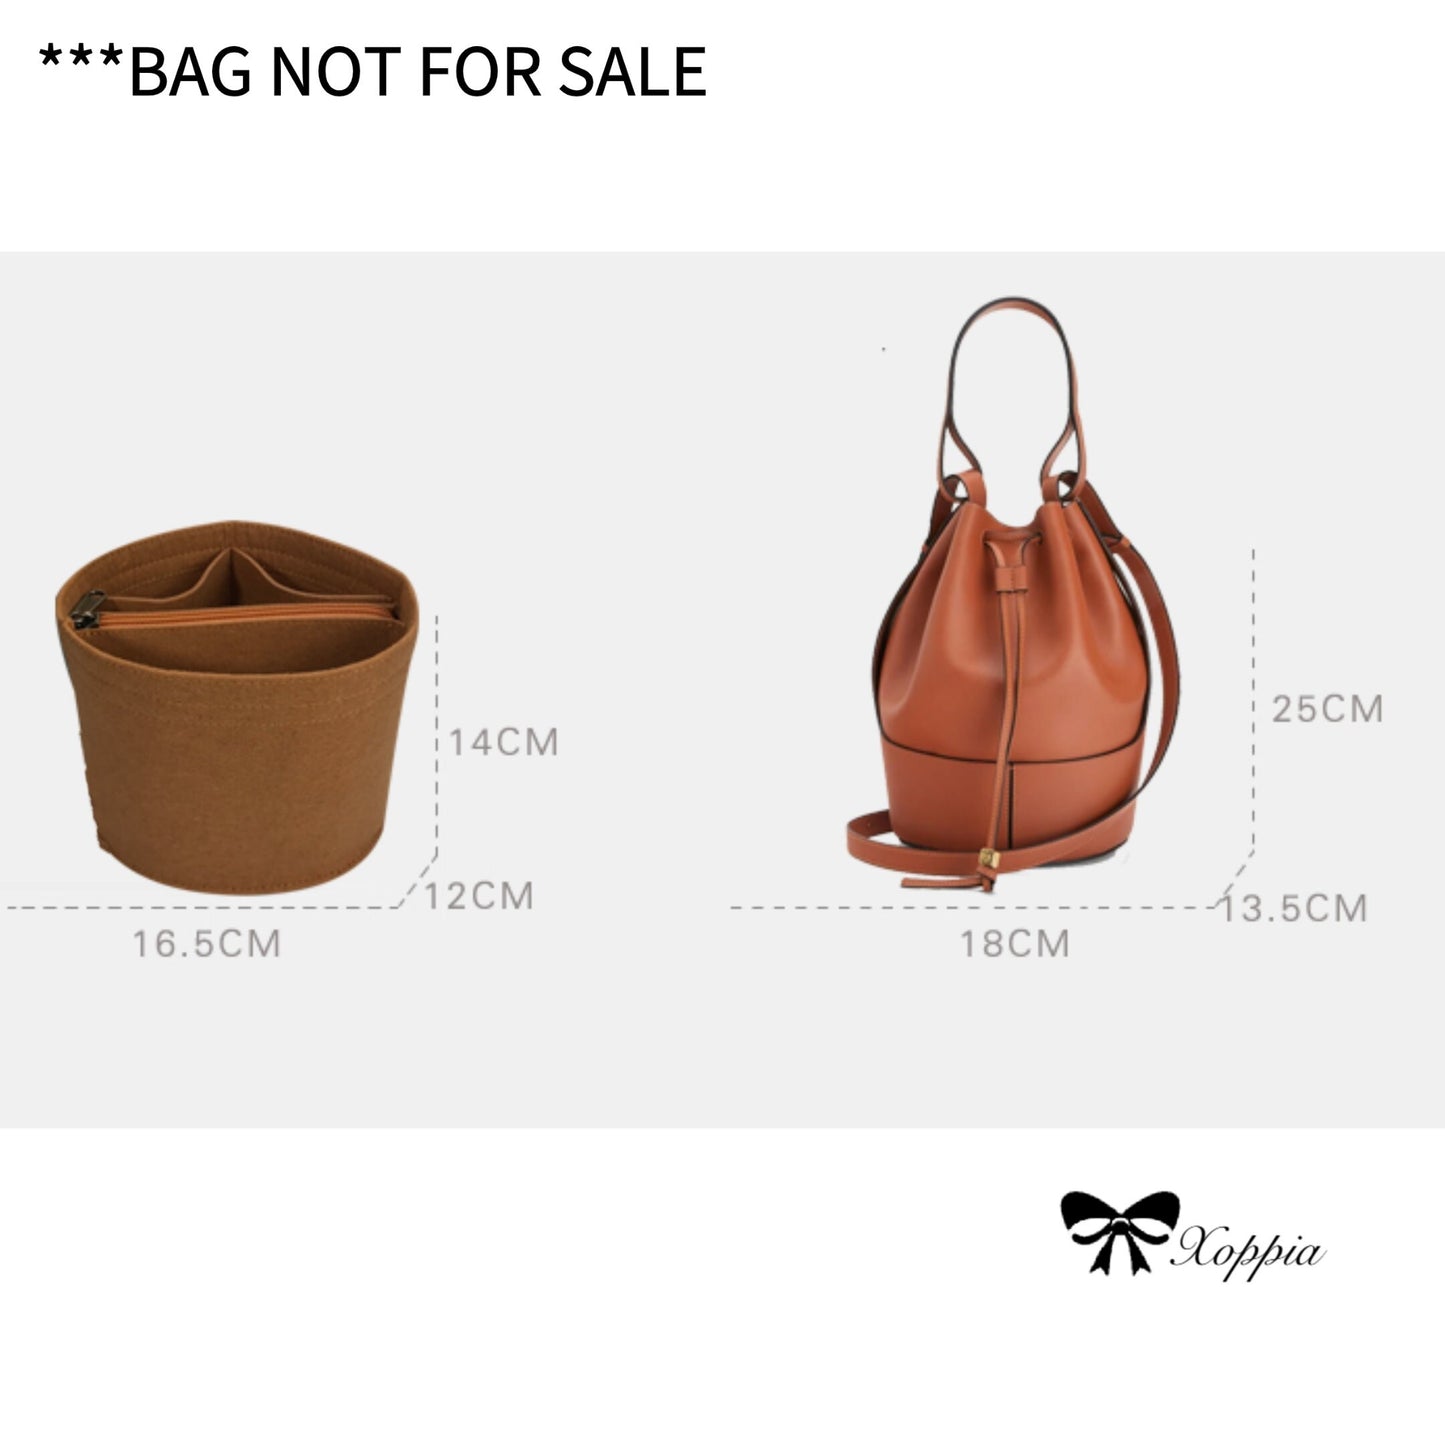 Bag Organizer For Balloon Handbag. Bag Insert For Tote Bag.